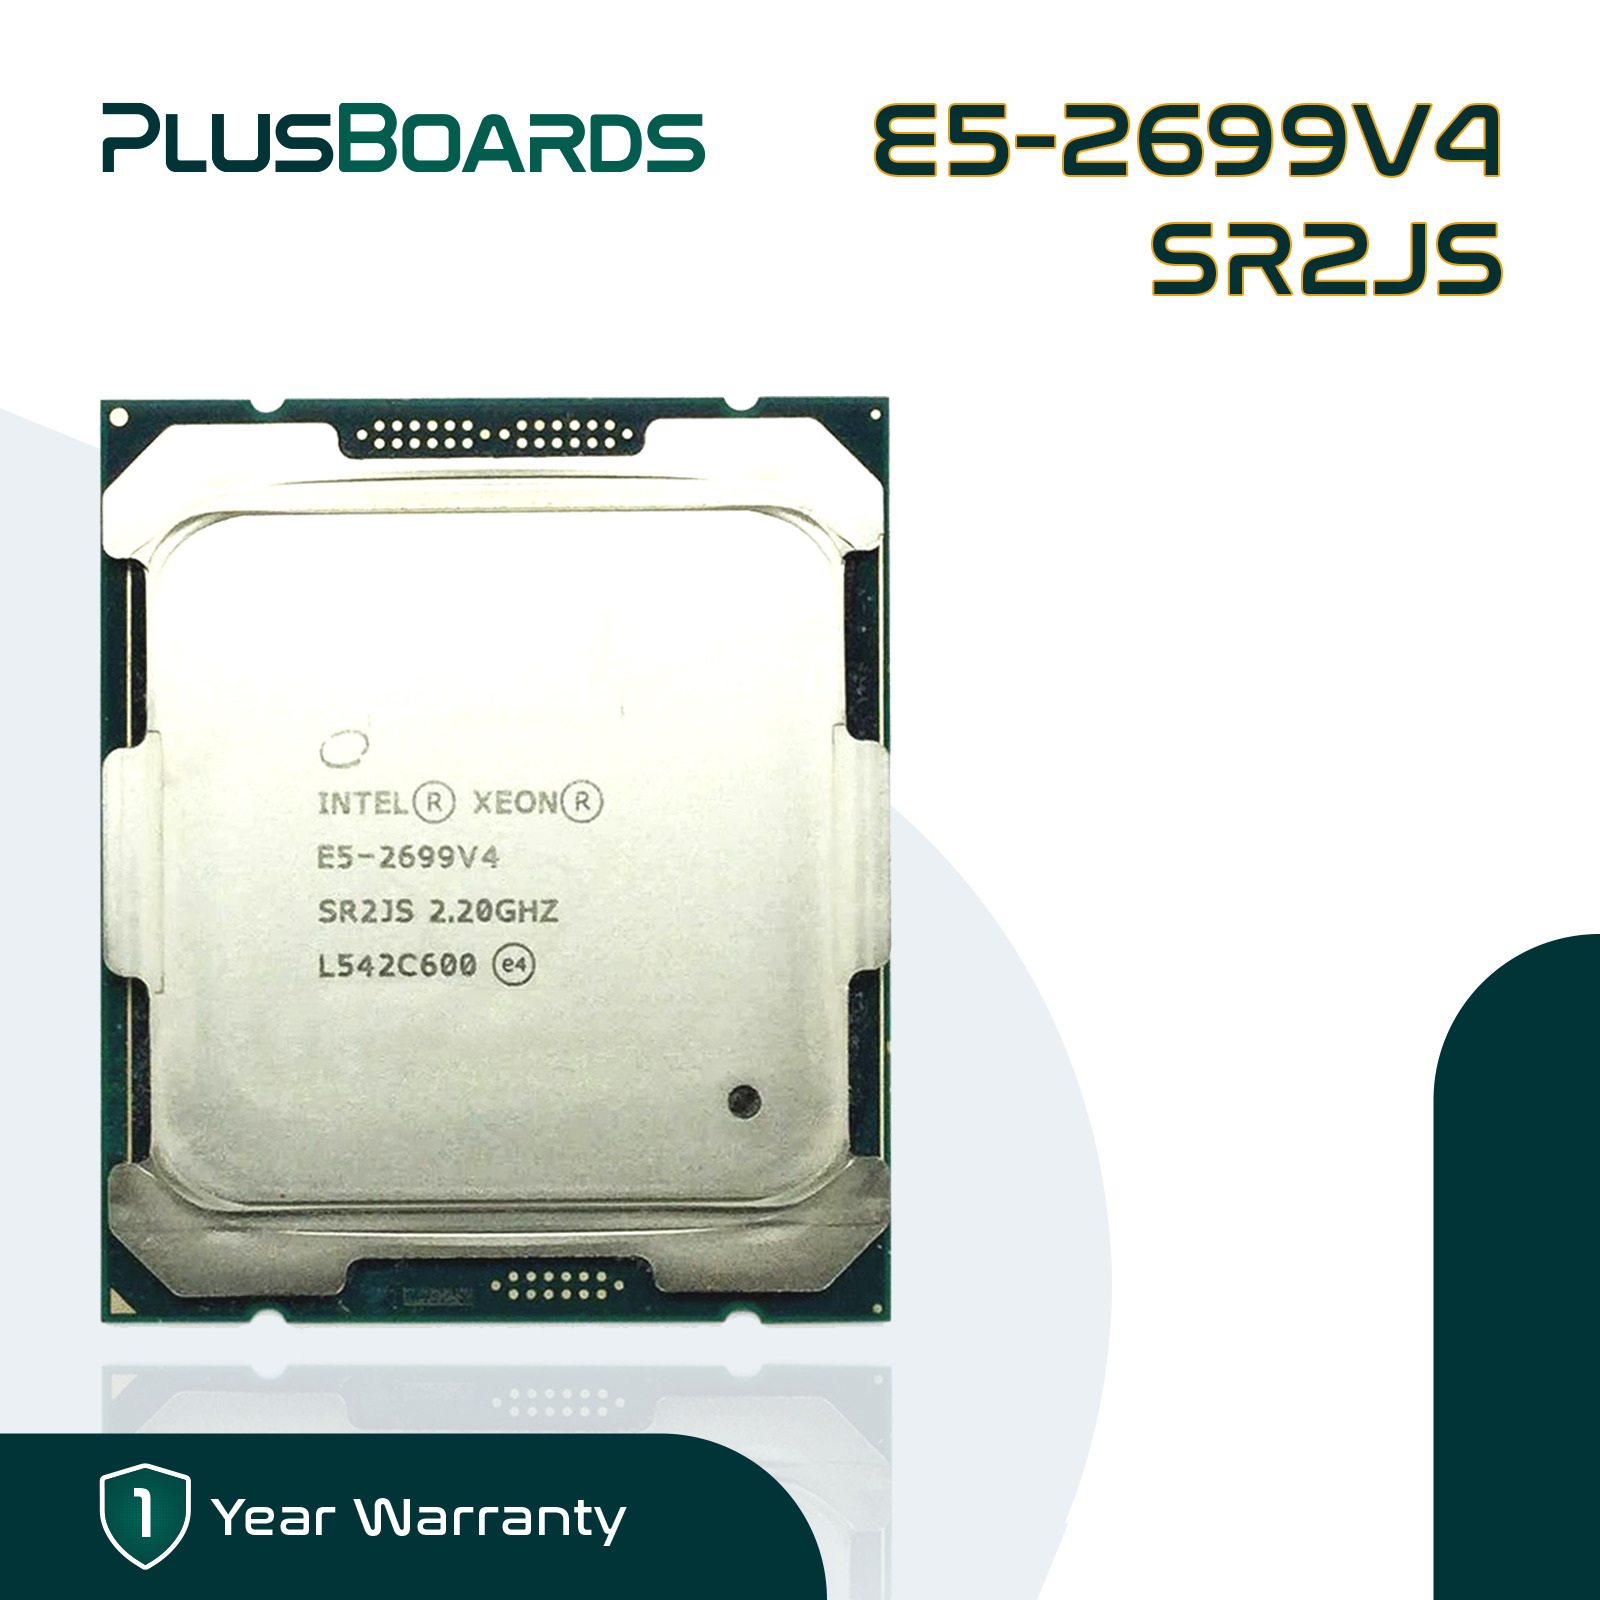 Biggest Baddest Best V4 CPU Made E5-2699 v4 22 Core Intel Xeon x10D R630 55MB